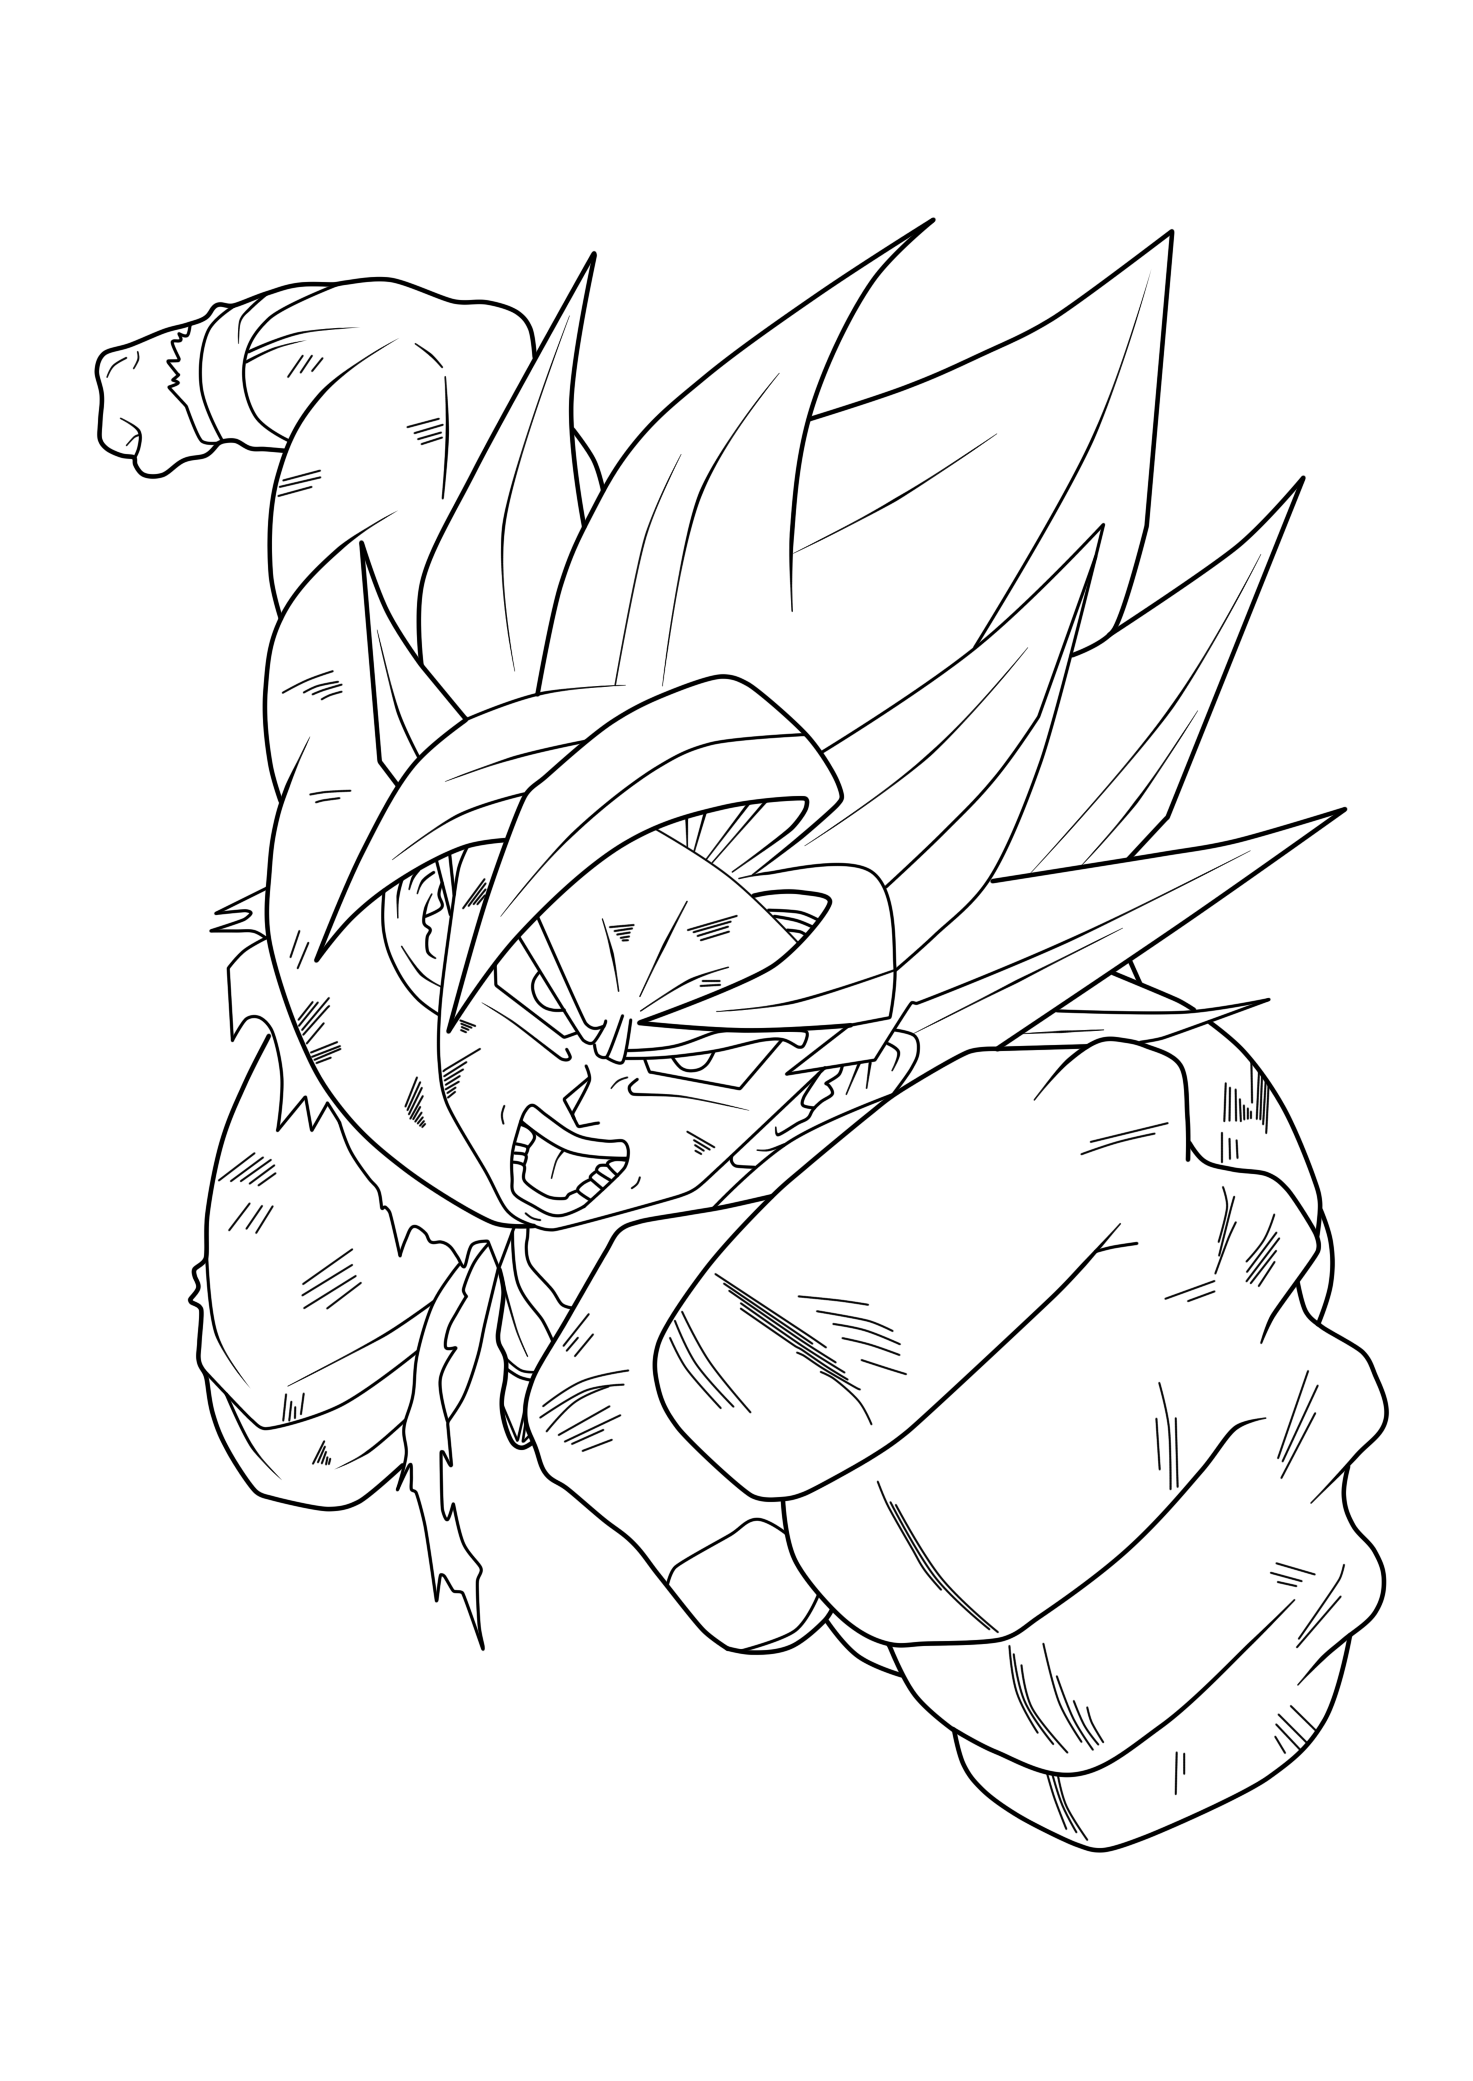 Goku. :Lineart:. Art. Dragon ball artwork, Dragon ball art, Dragon ball z